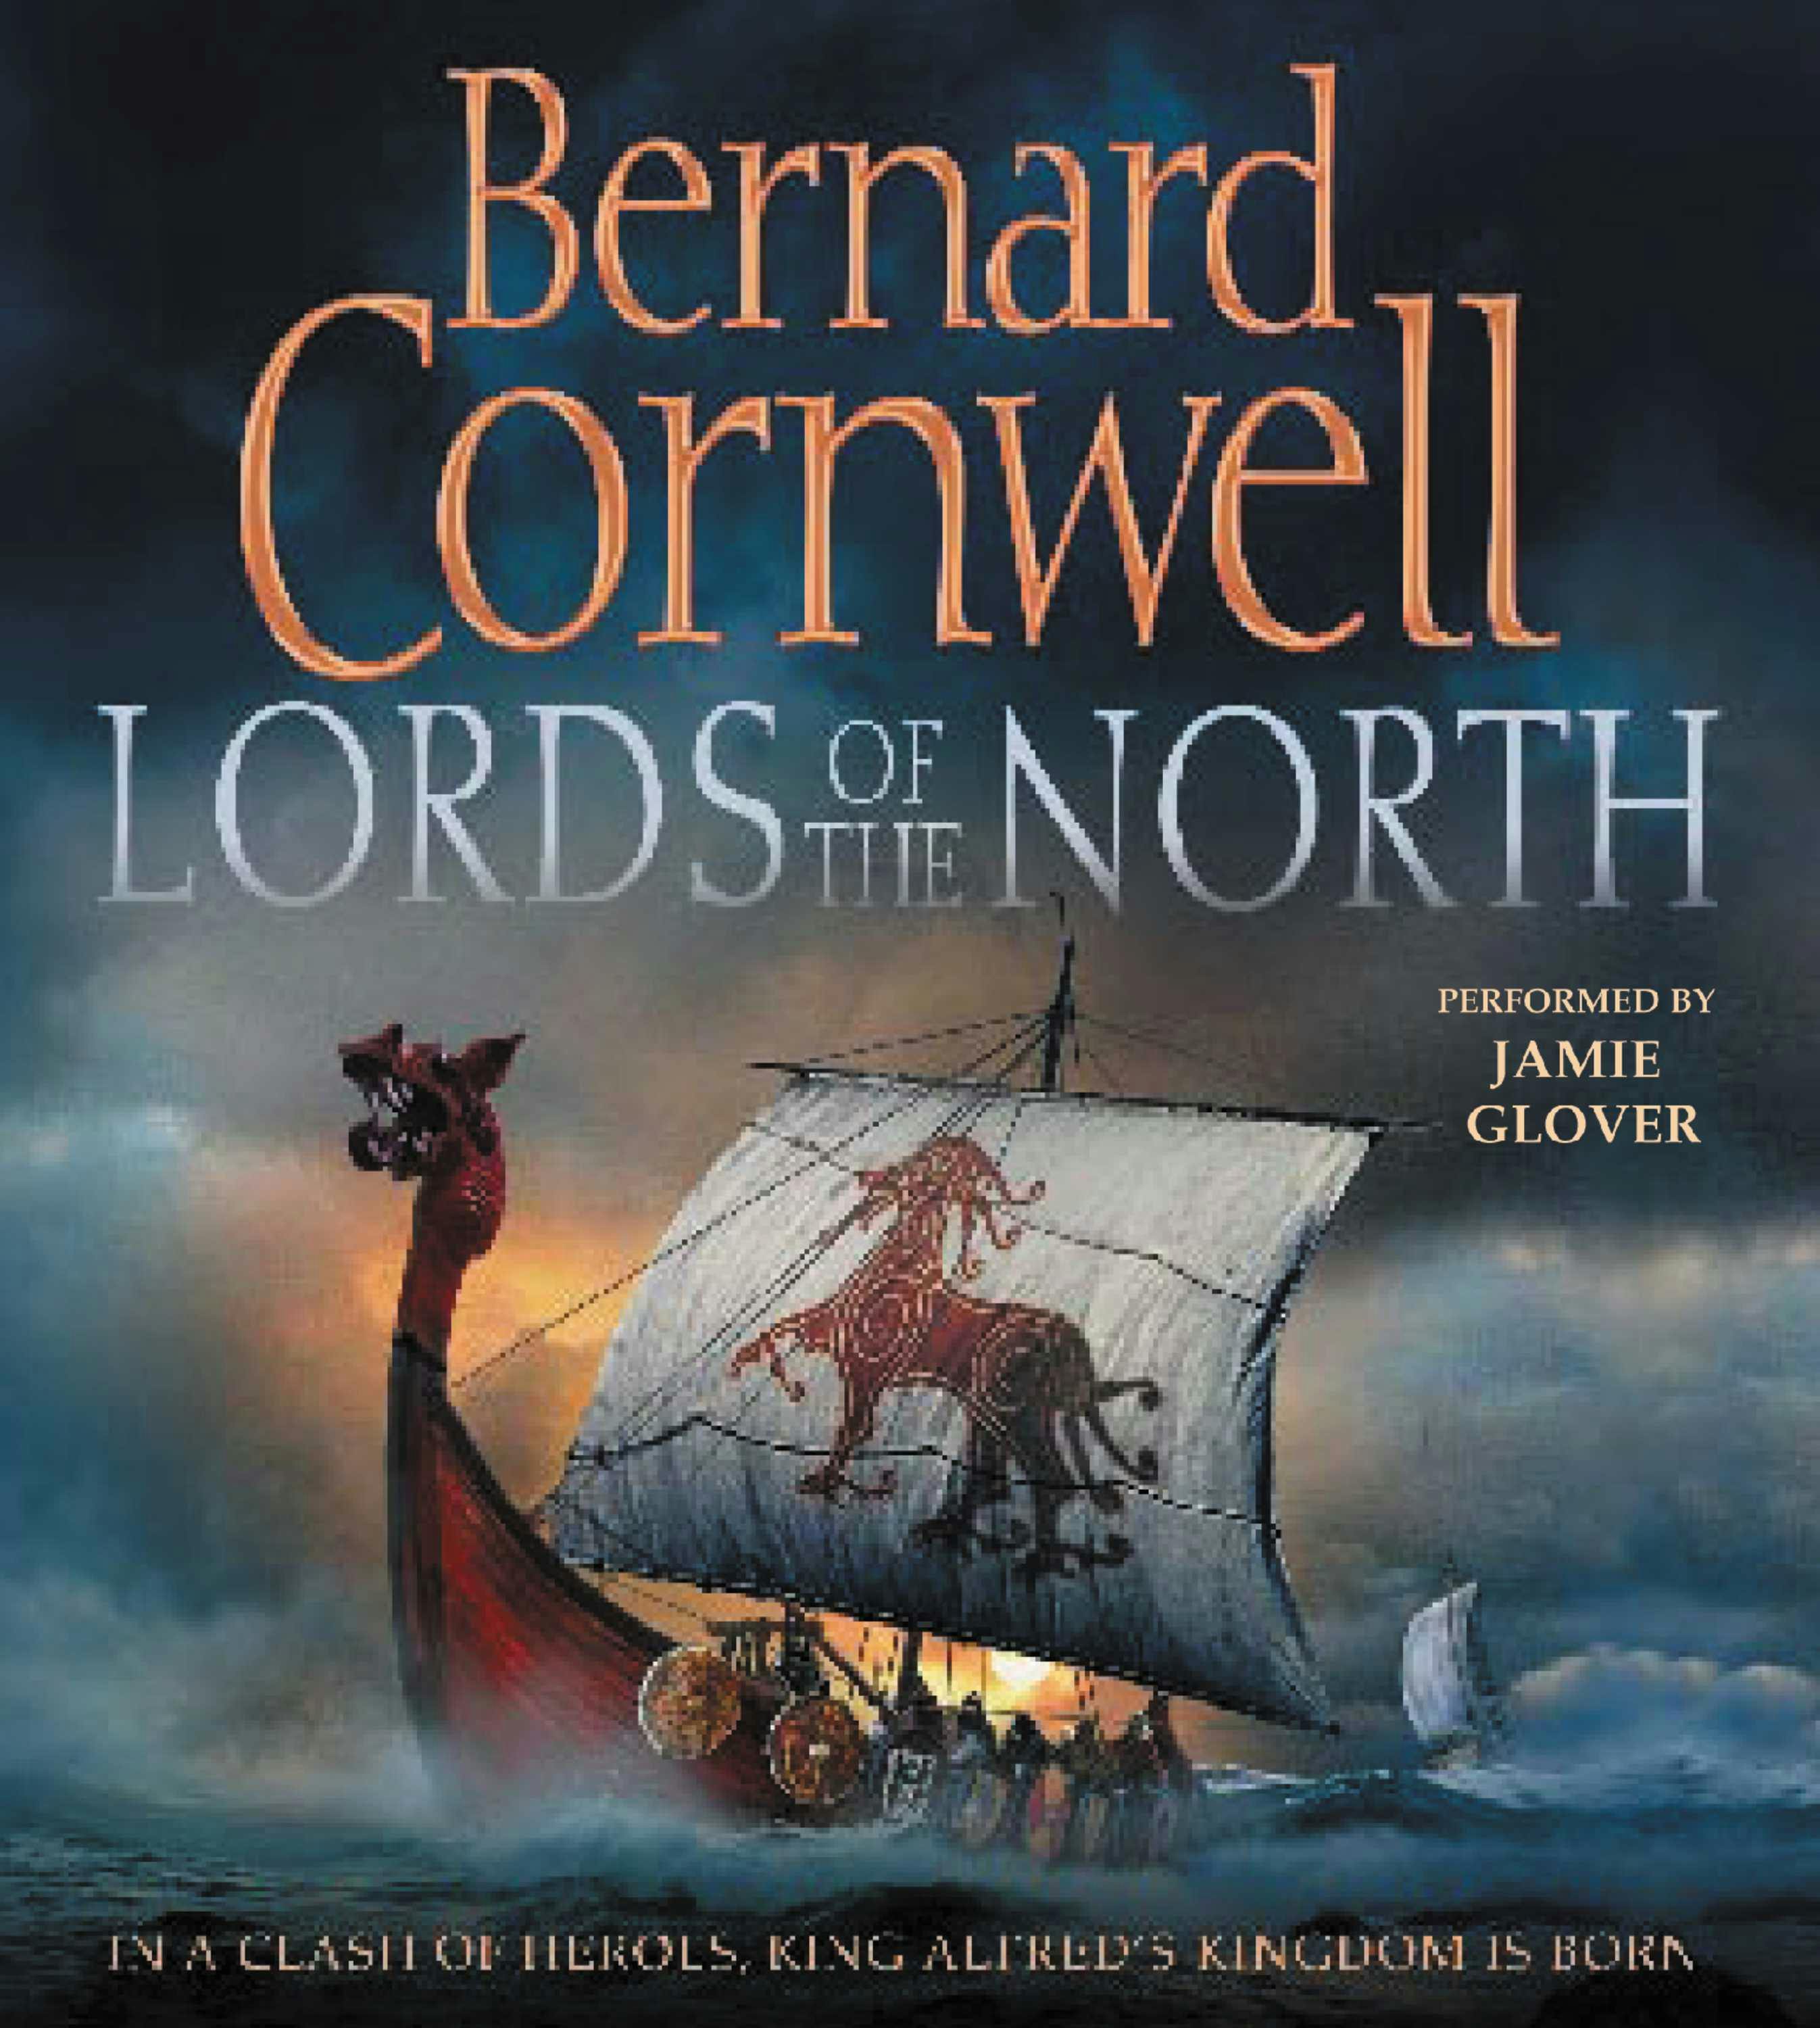 Lords of the North - Bernard Cornwell